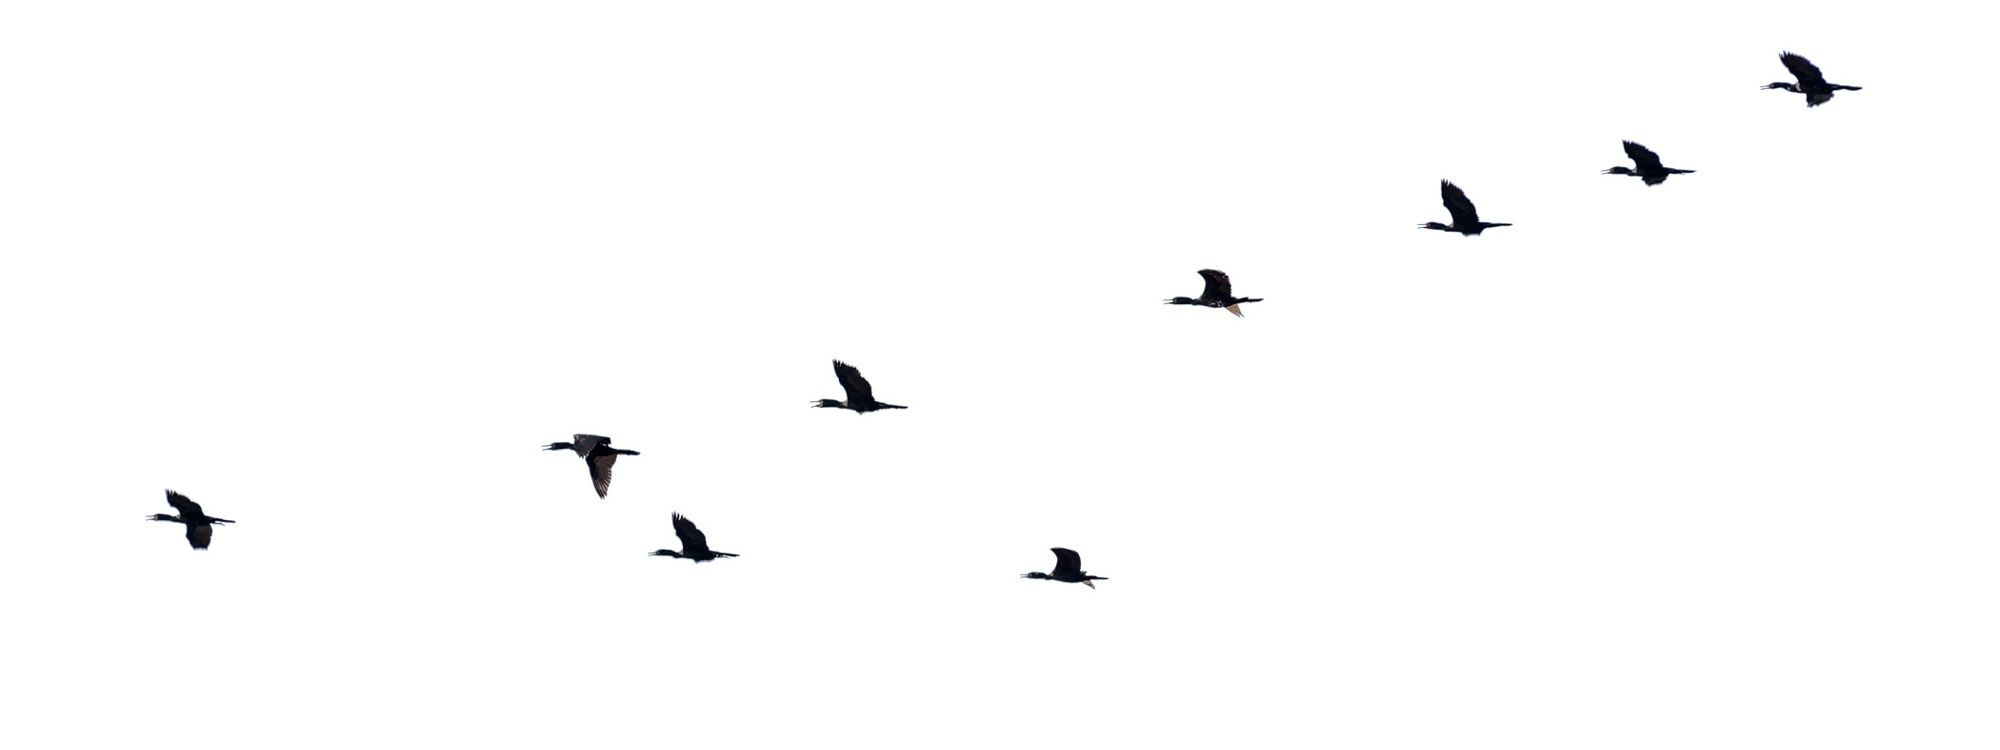 Silhouette flock of birds flying in a row 2021 08 27 09 39 20 utc